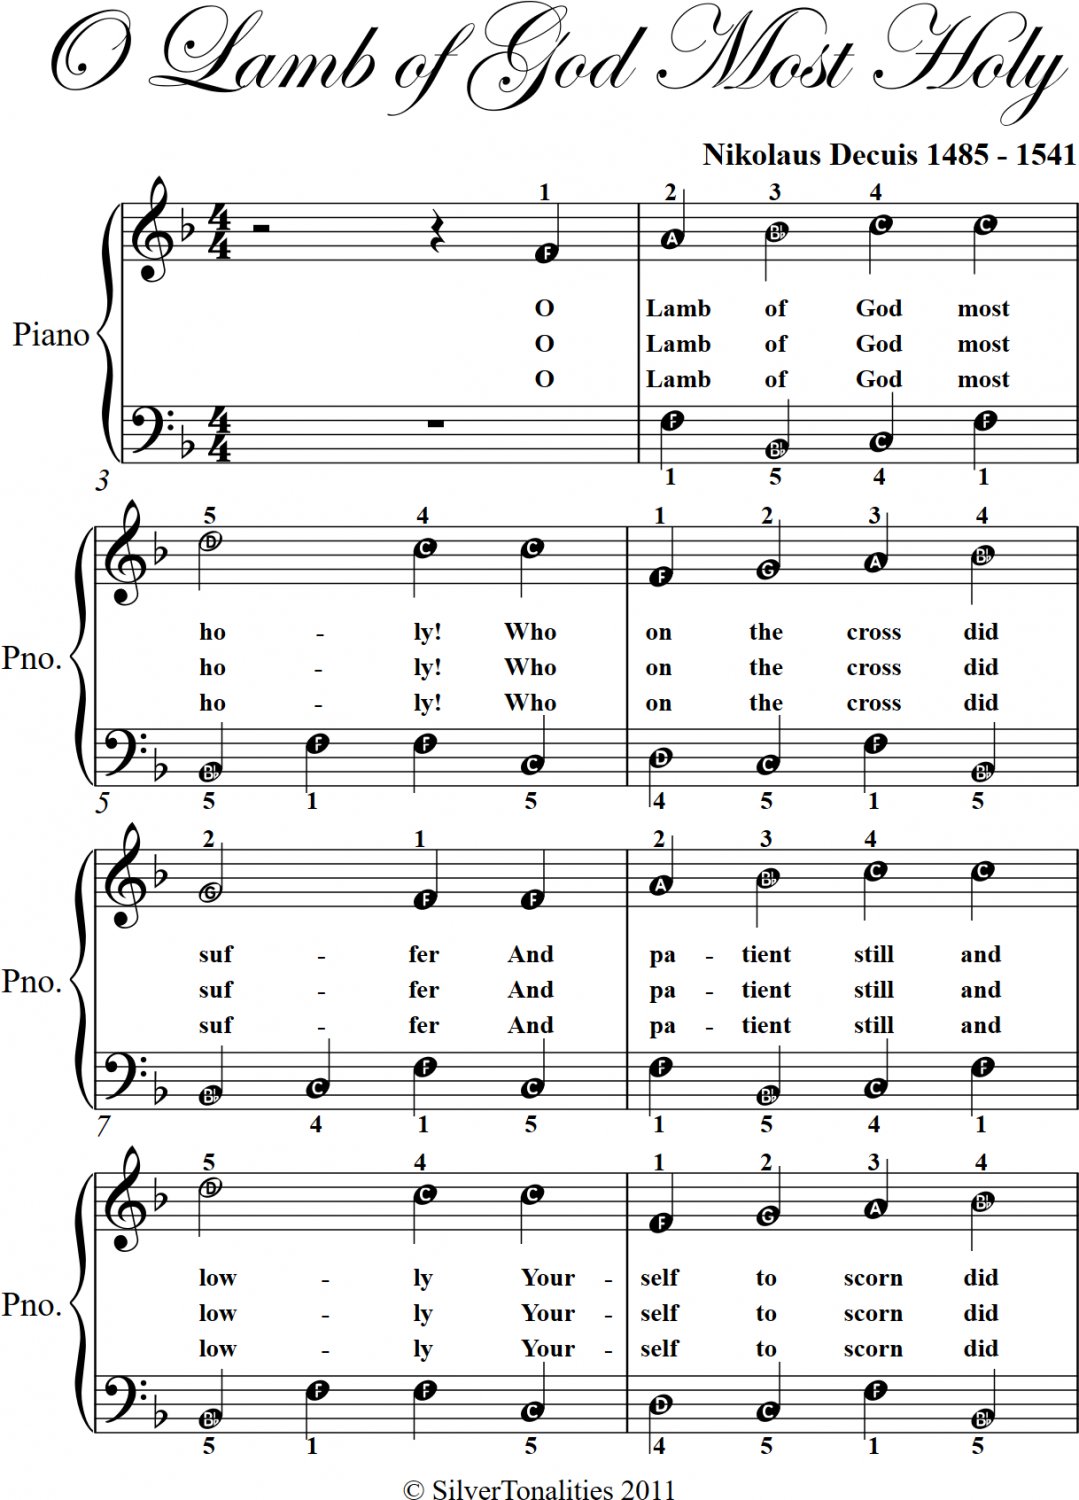 O Lamb of God Most Holy Easy Piano Sheet Music